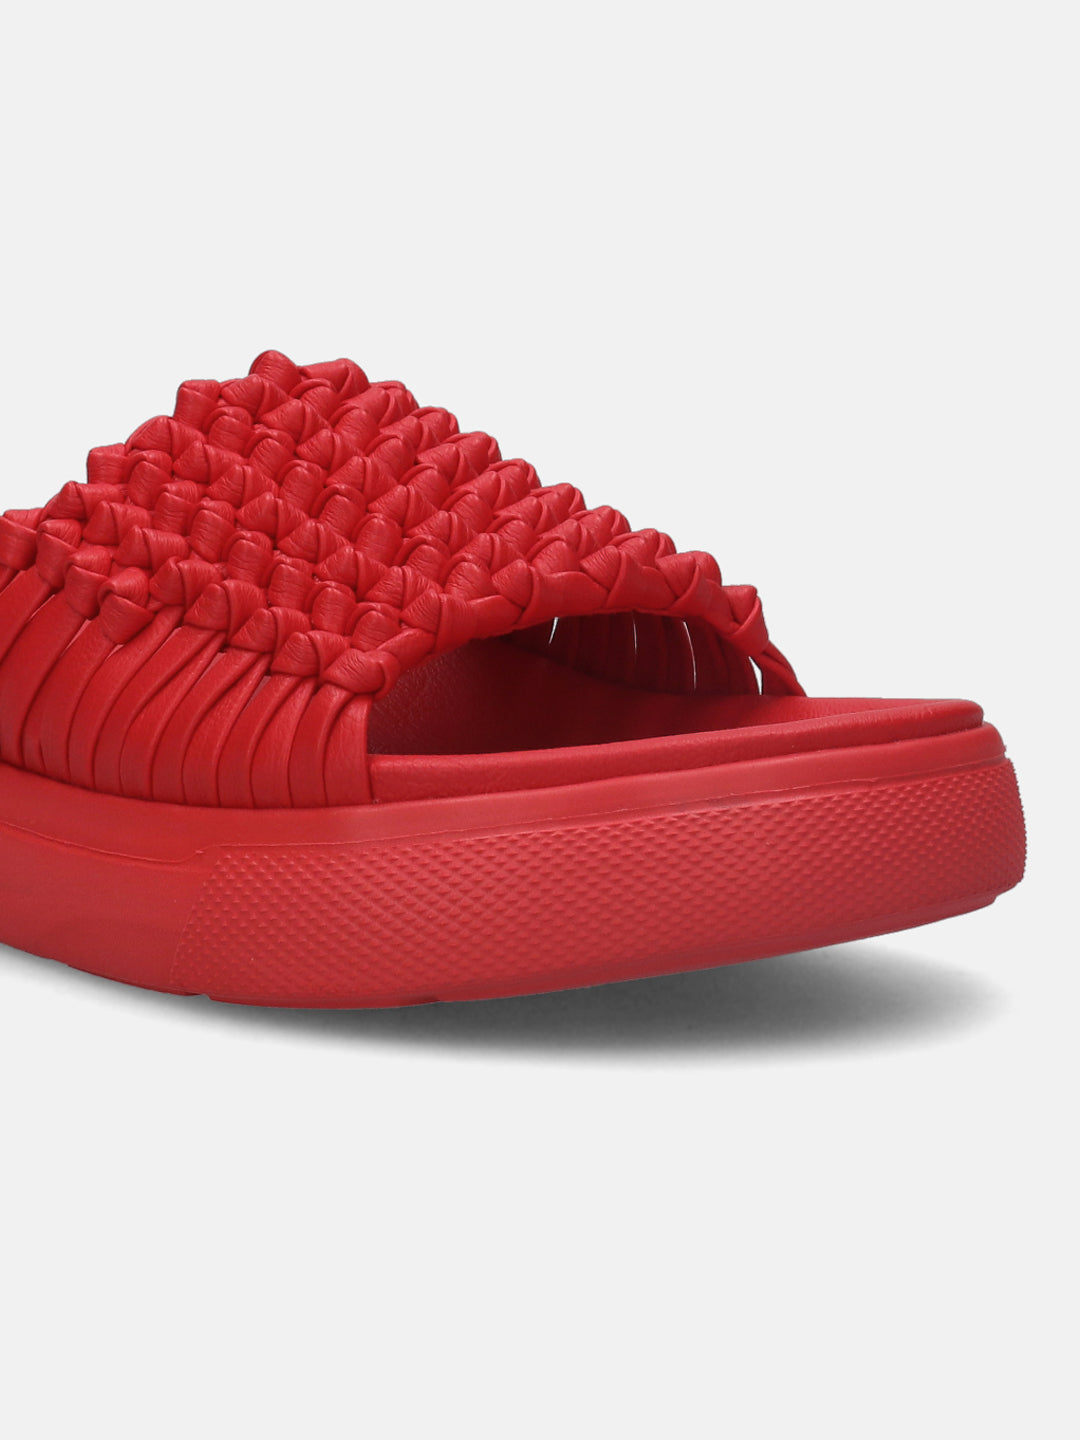 Dalia Red Flatform Sandals - BAGATT